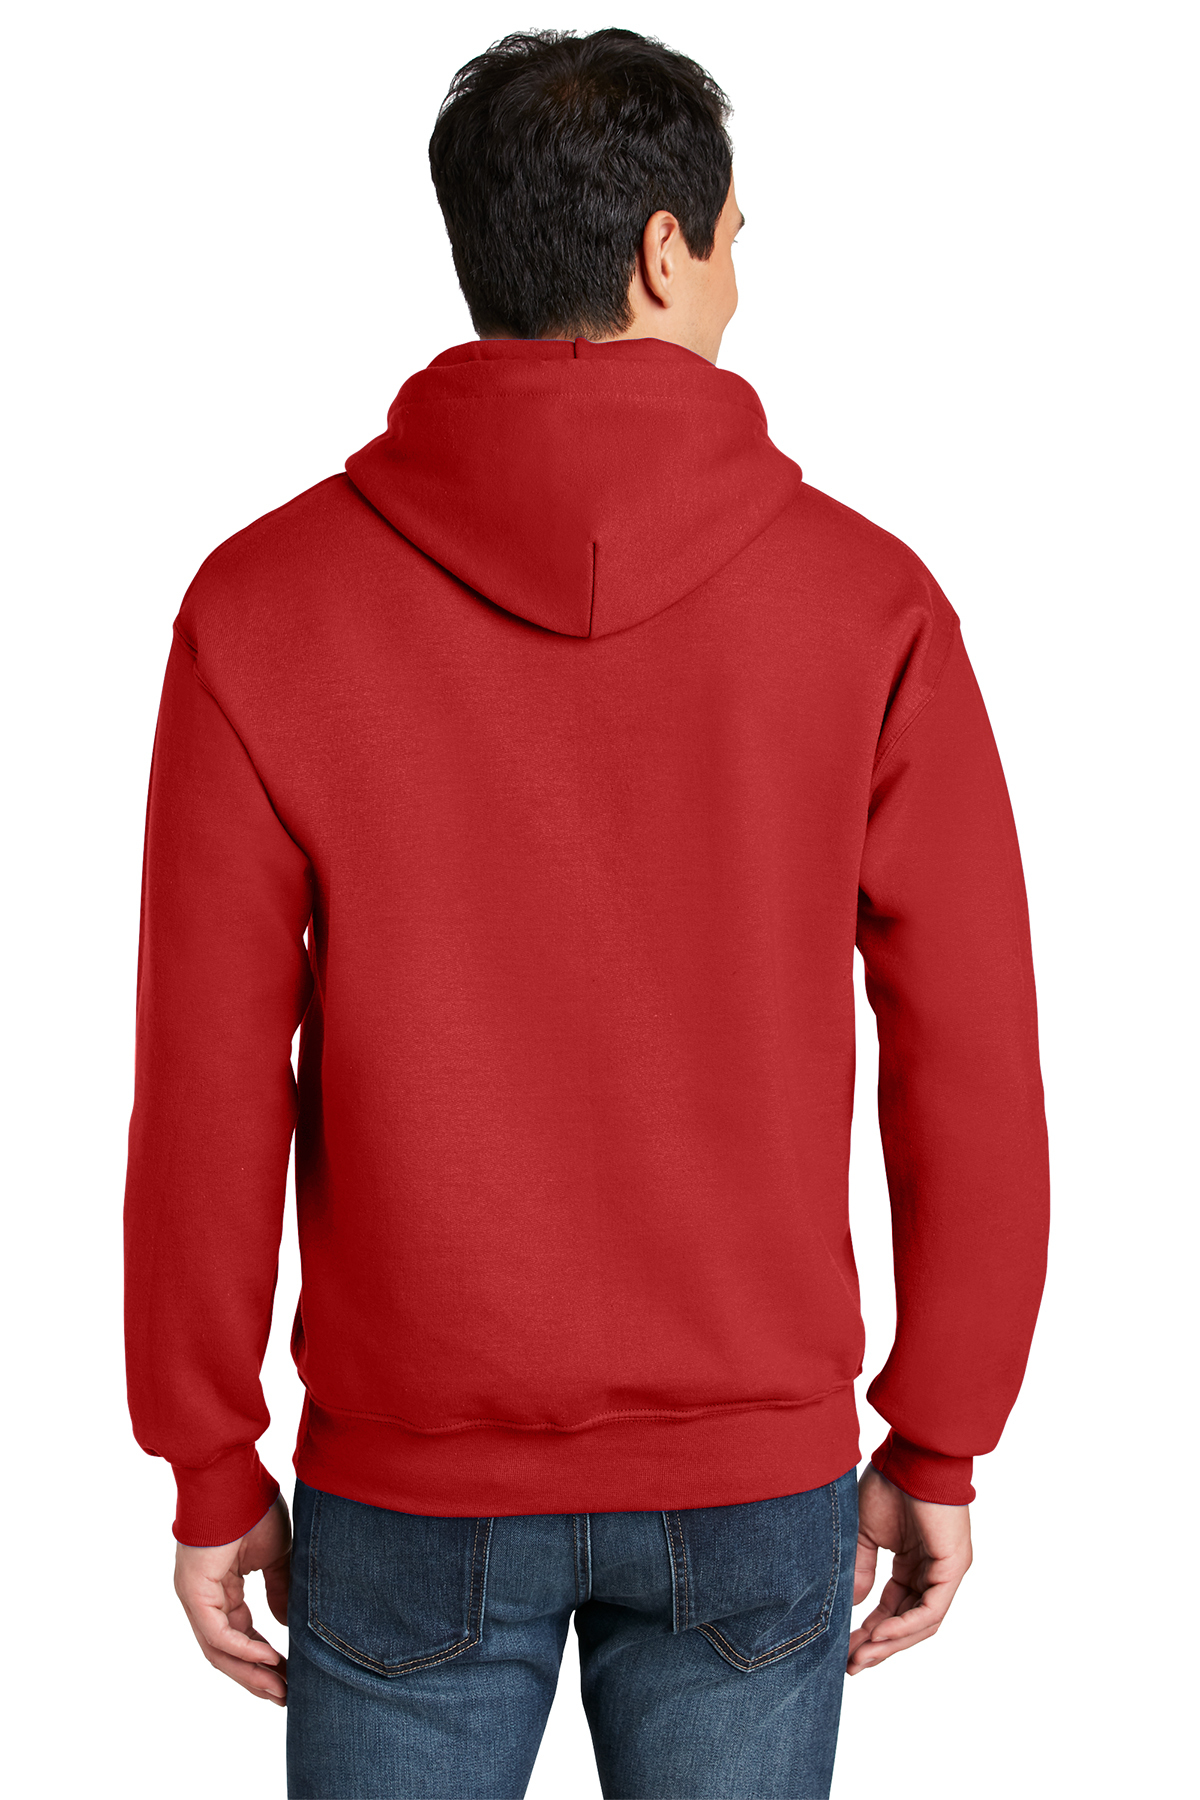 Sweatshirt | SanMar DryBlend - | Pullover Product Gildan Hooded